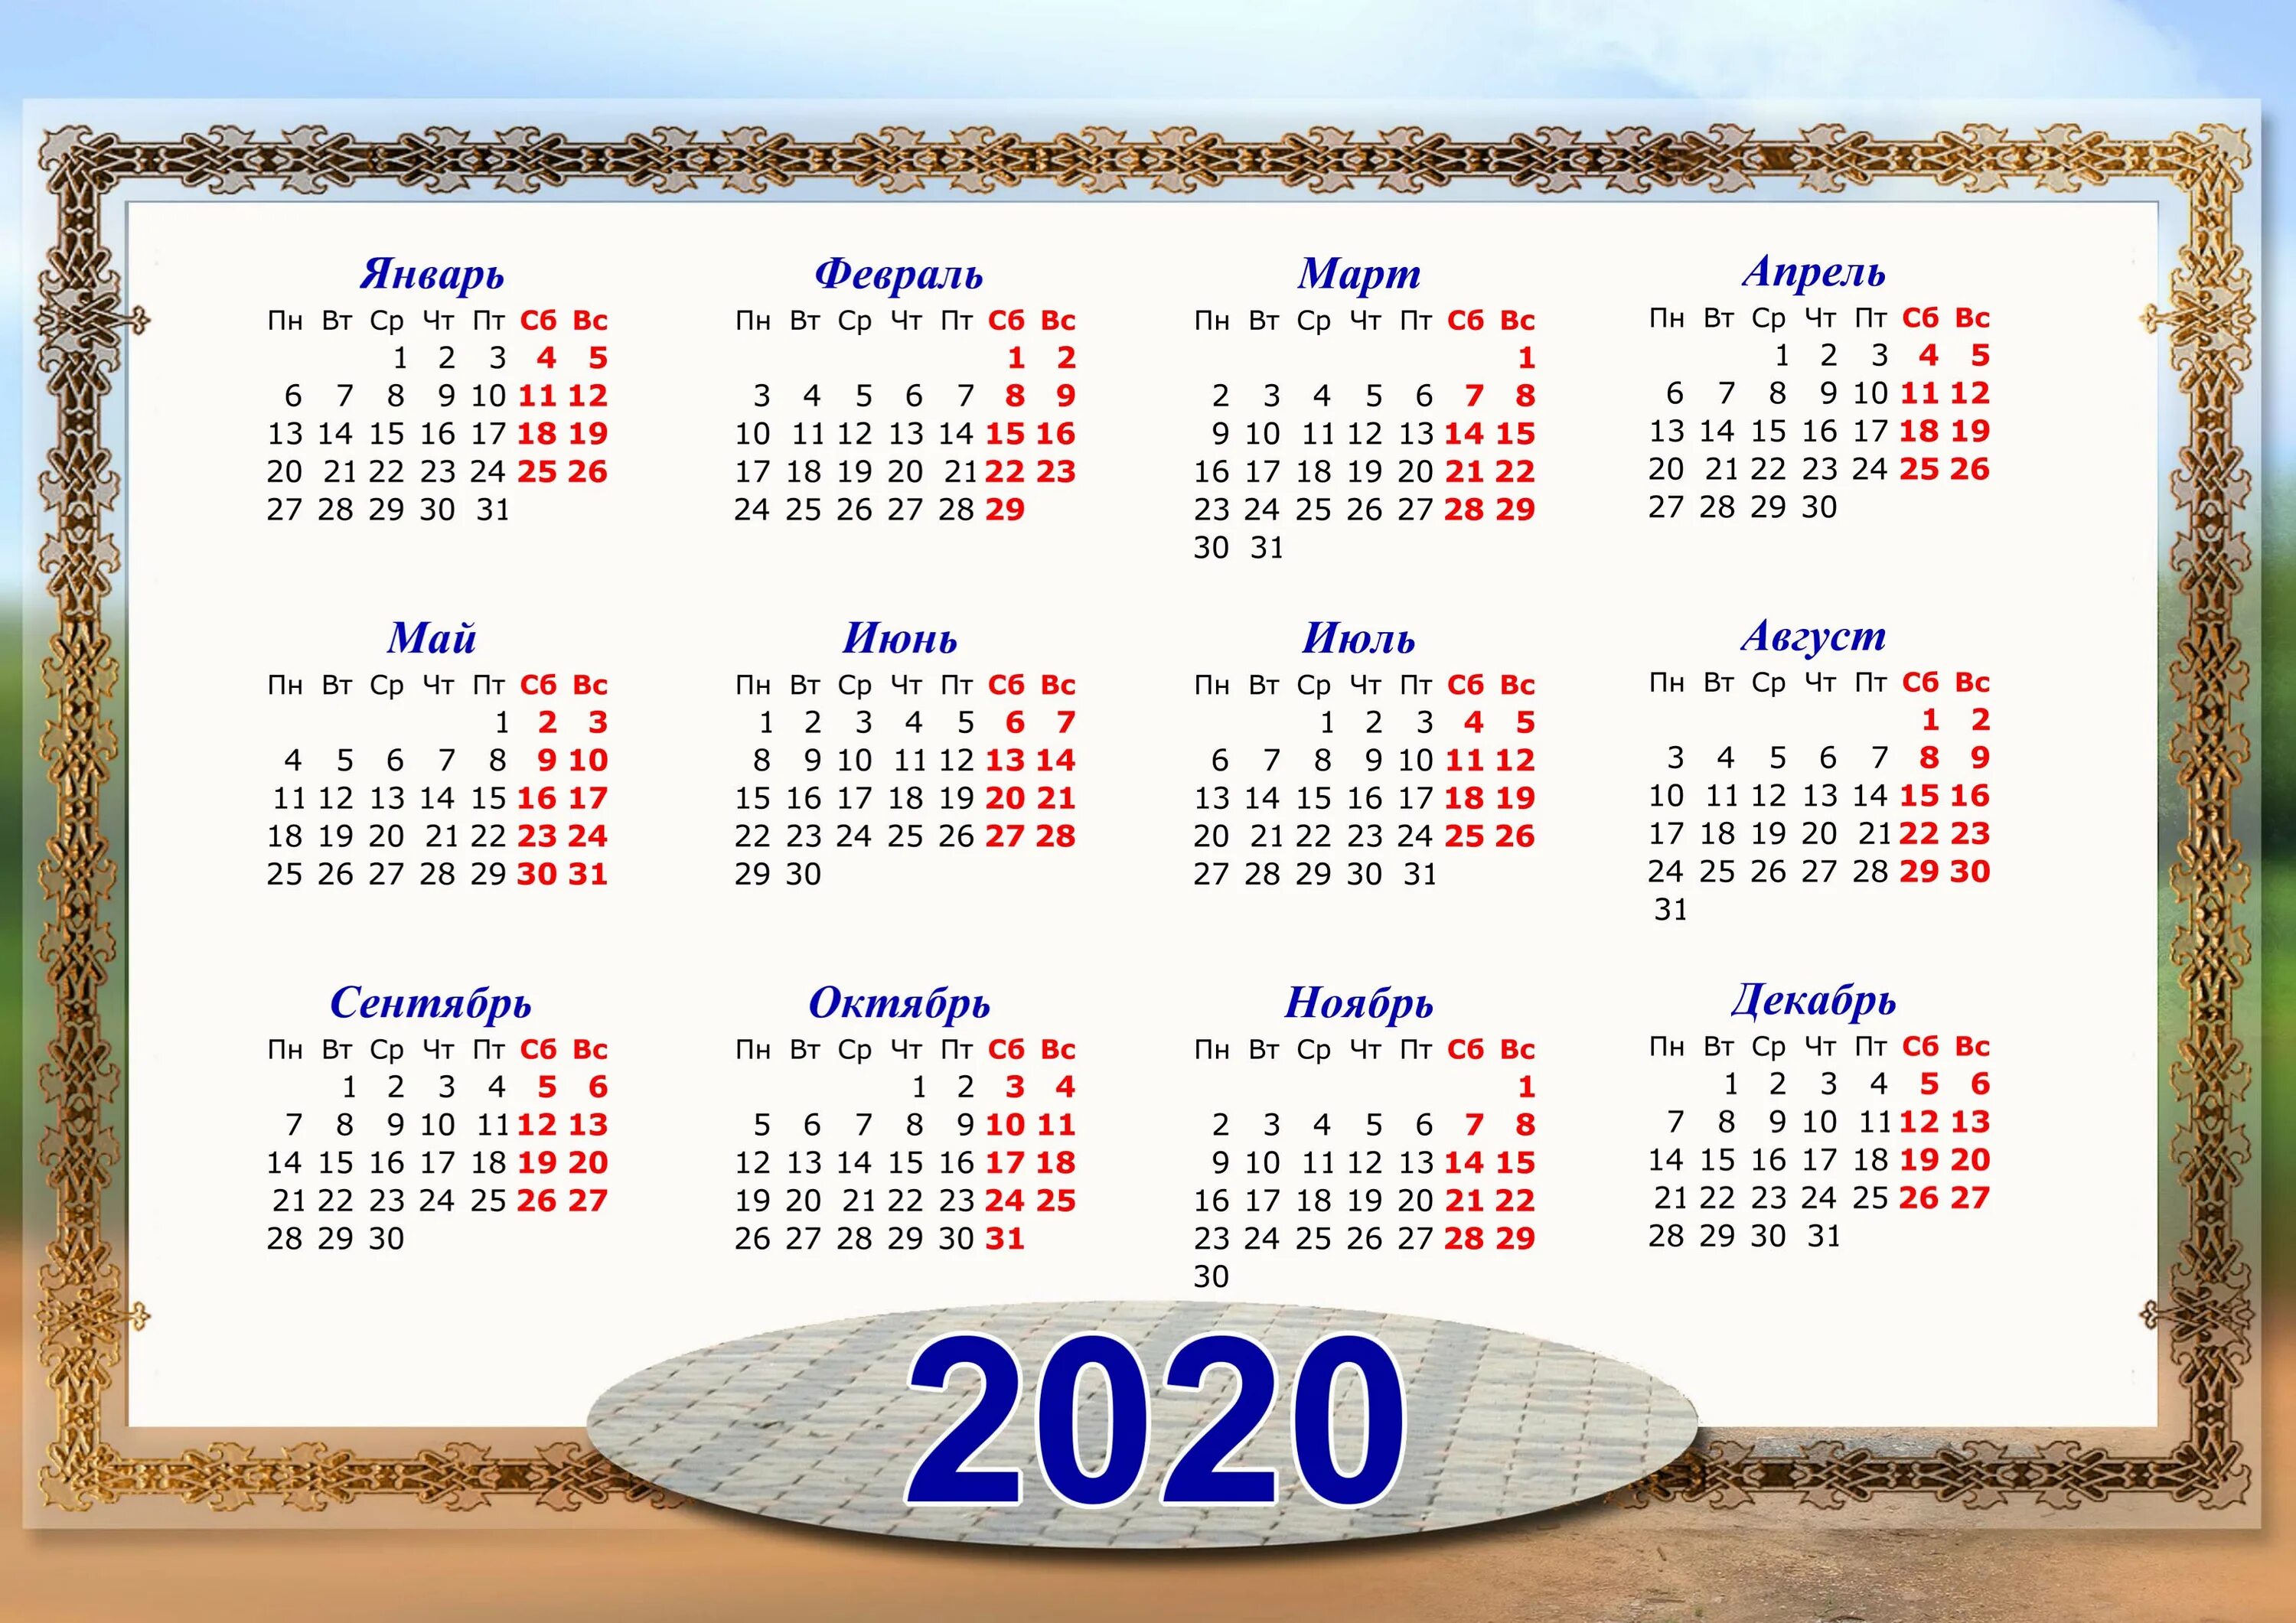 9 месяц календаря. Календарь. Календарь 2020. Календарь за прошлый год. Календарь на 2020 год.